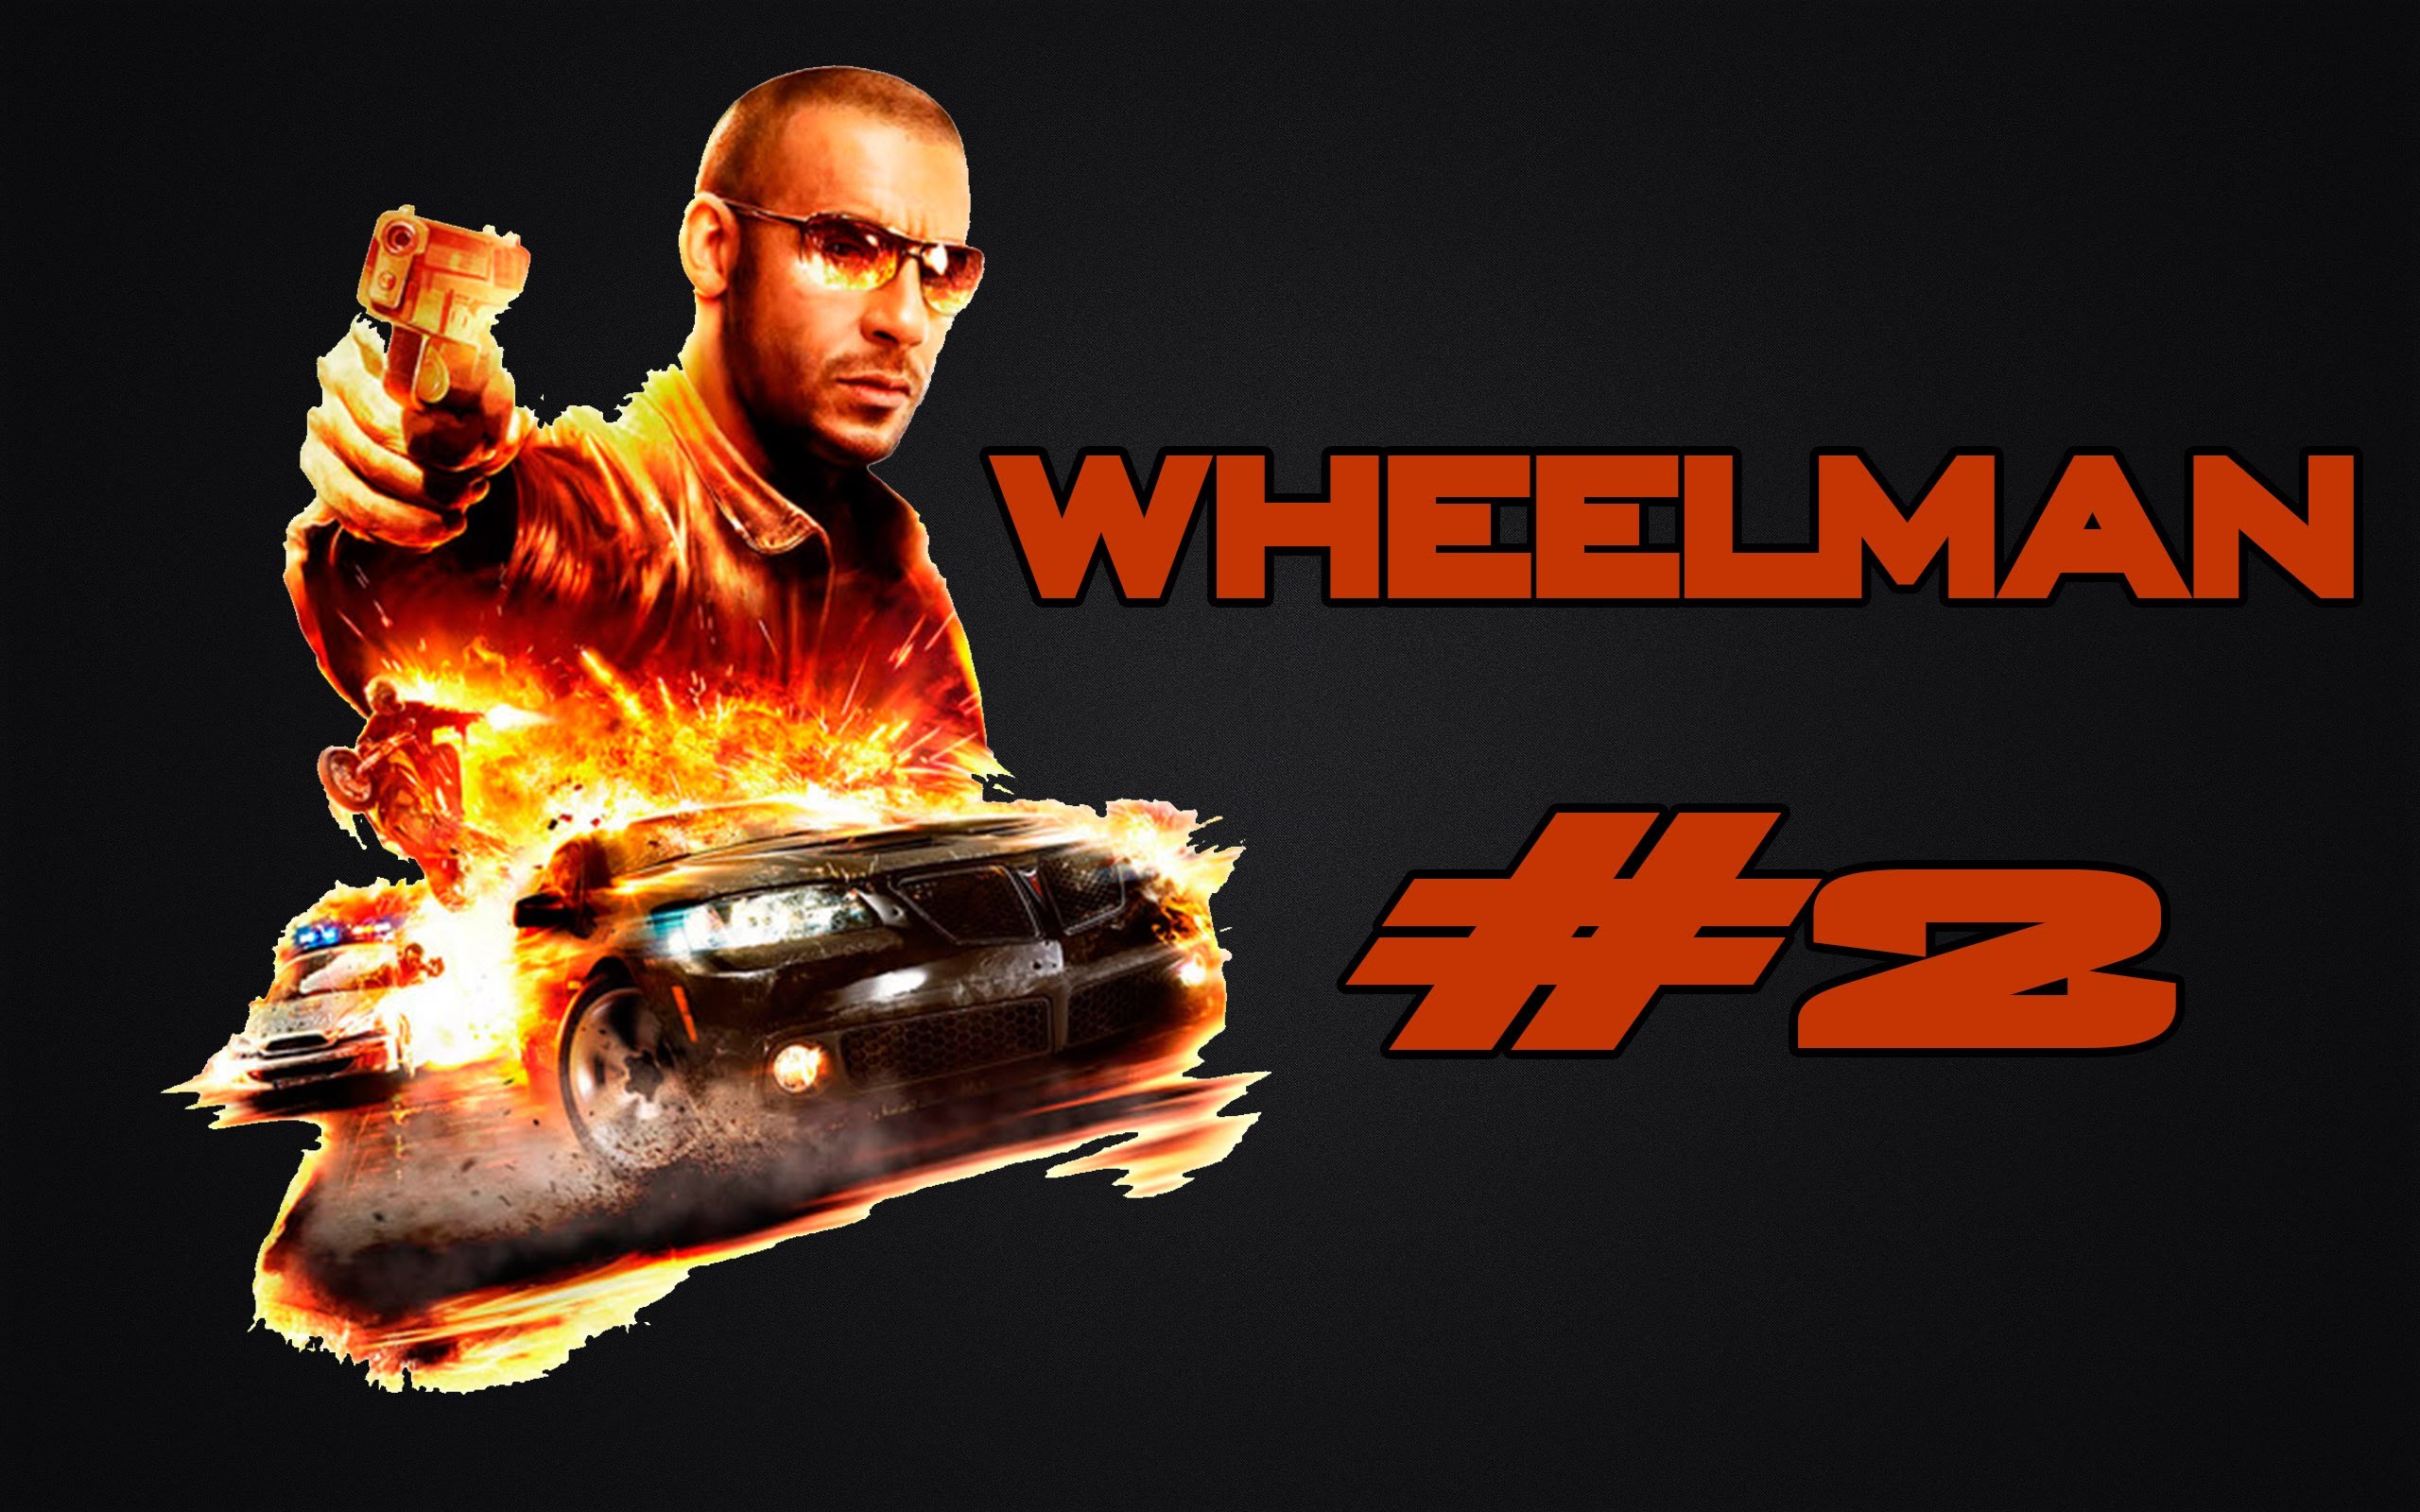 Wheelman #20